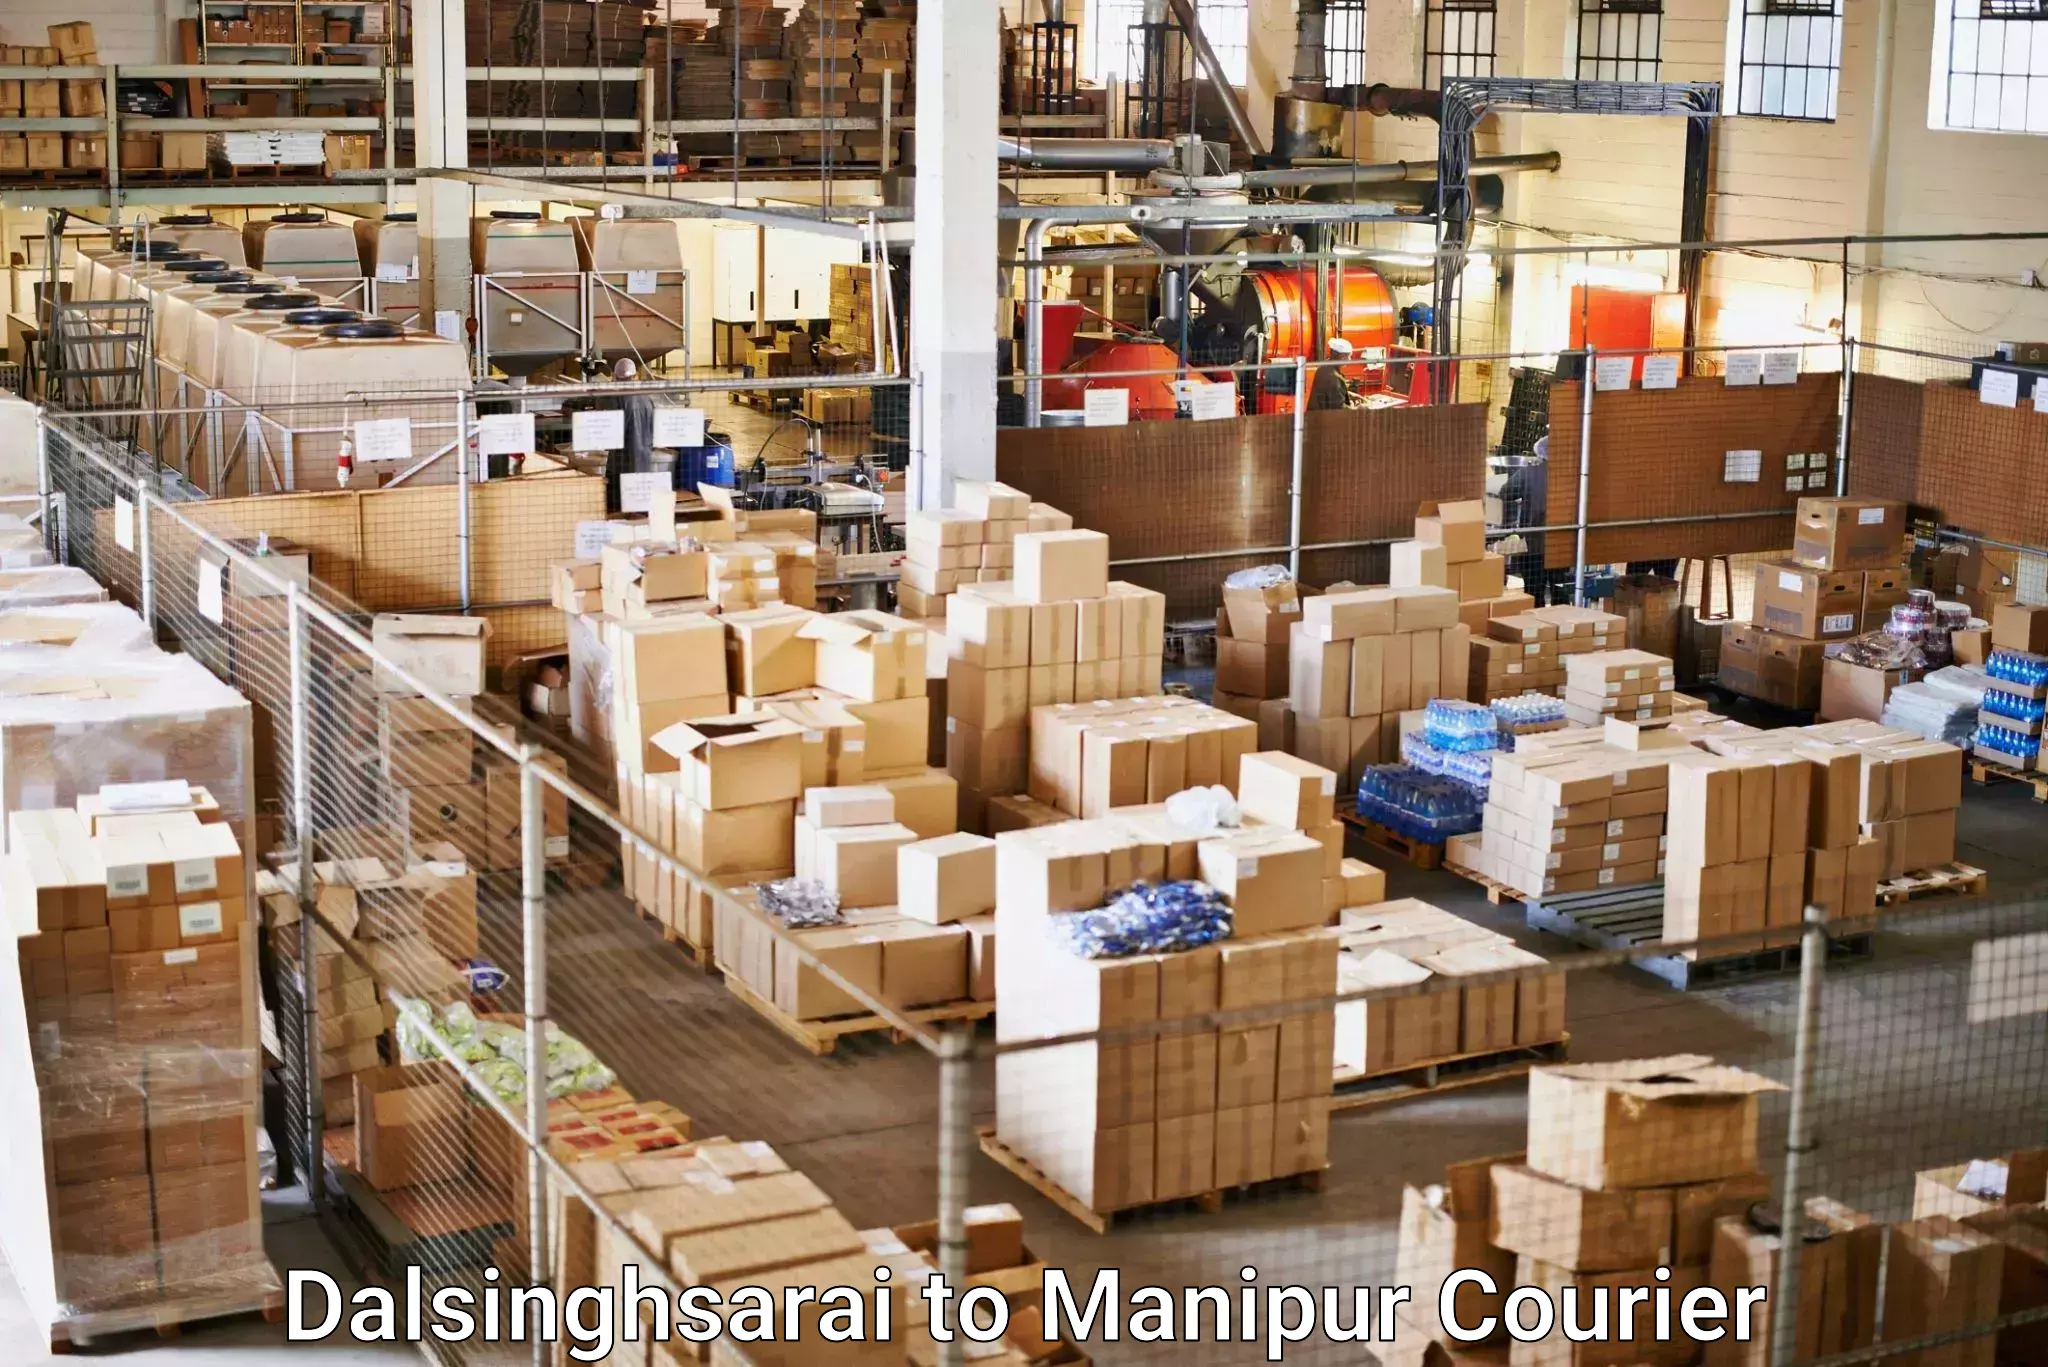 Courier service partnerships Dalsinghsarai to Churachandpur